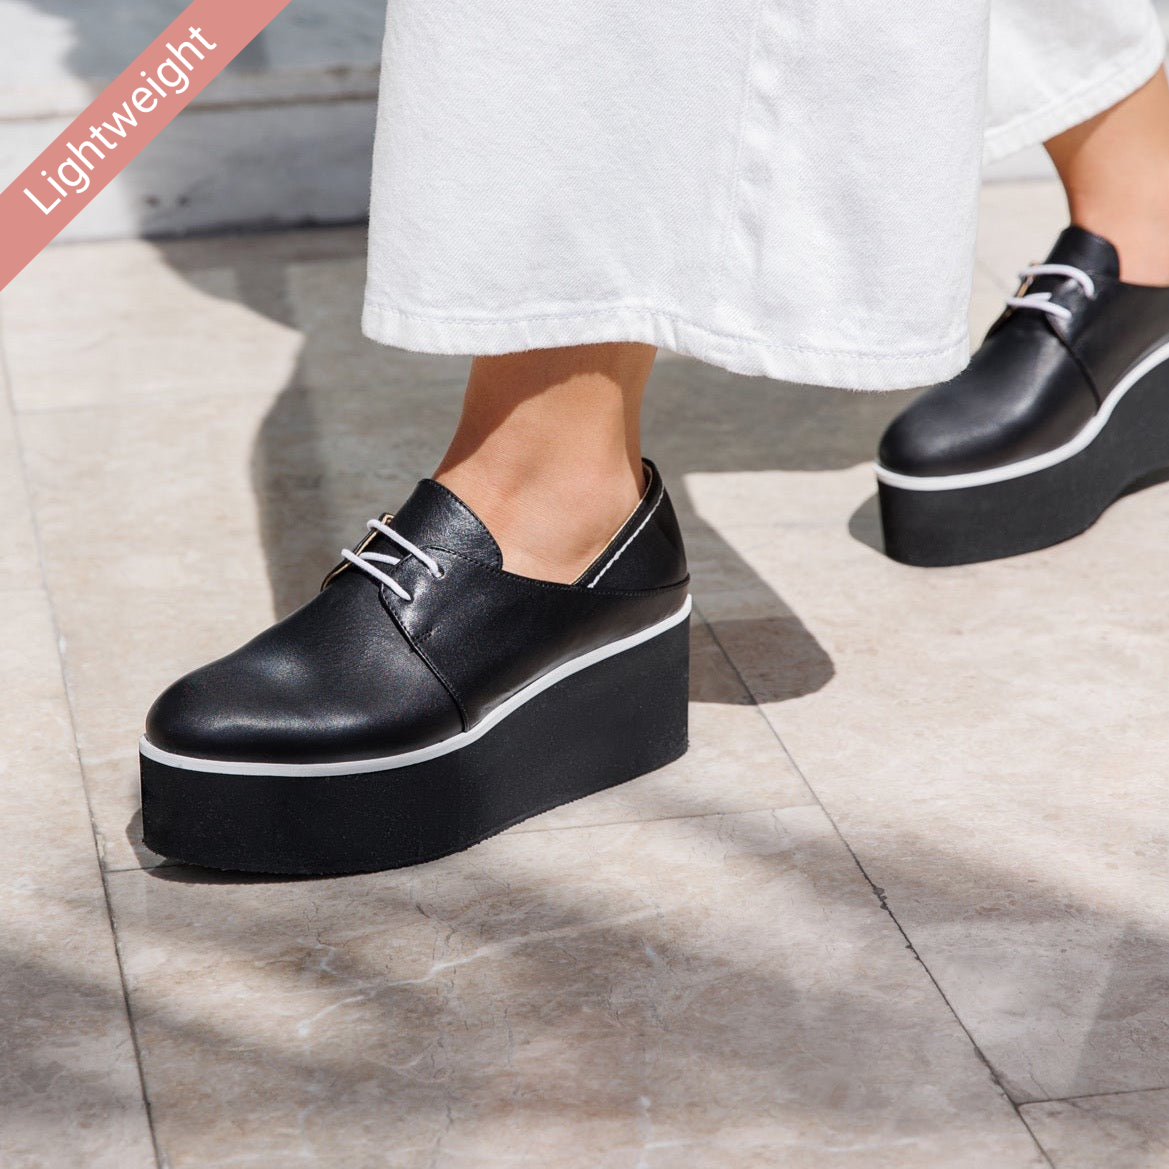 Lima black platform - Oxfords - kuwait - Ksa- shoes